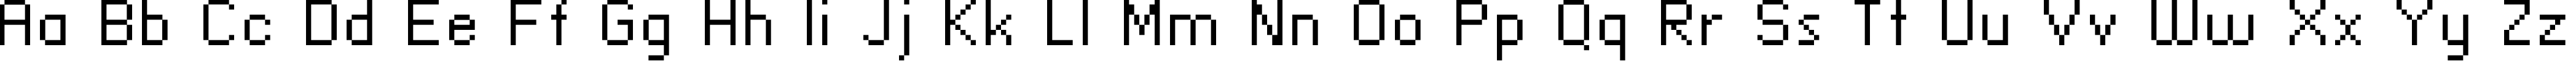 Пример написания английского алфавита шрифтом standard 09_56